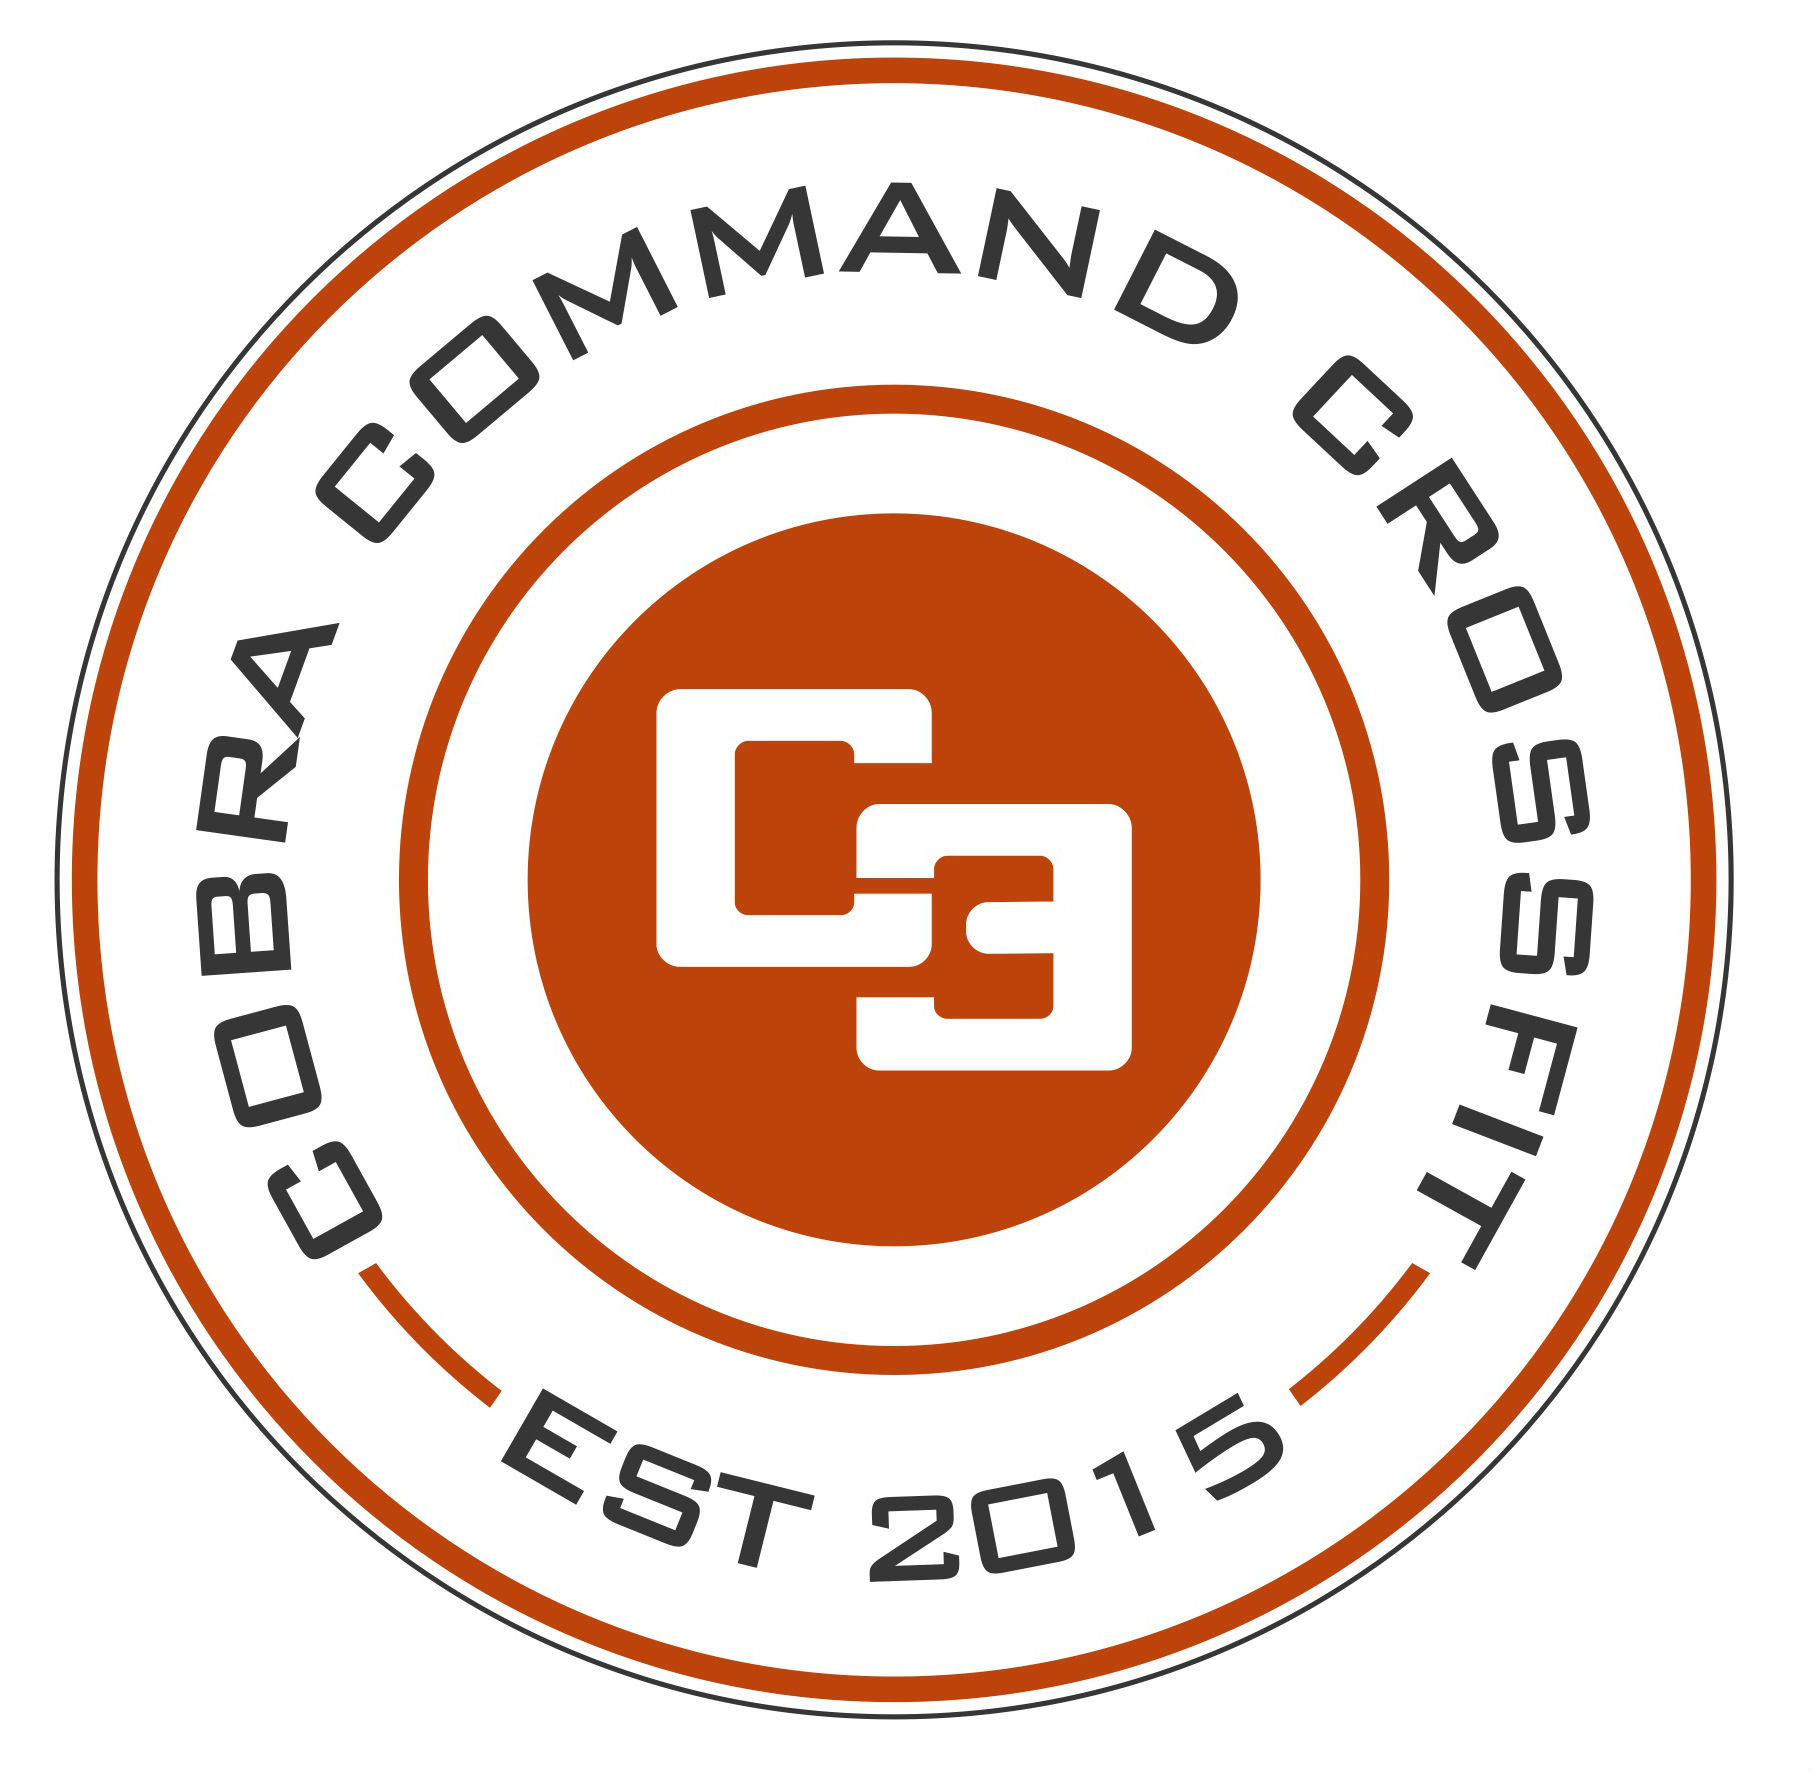 Cobra Command CrossFit logo